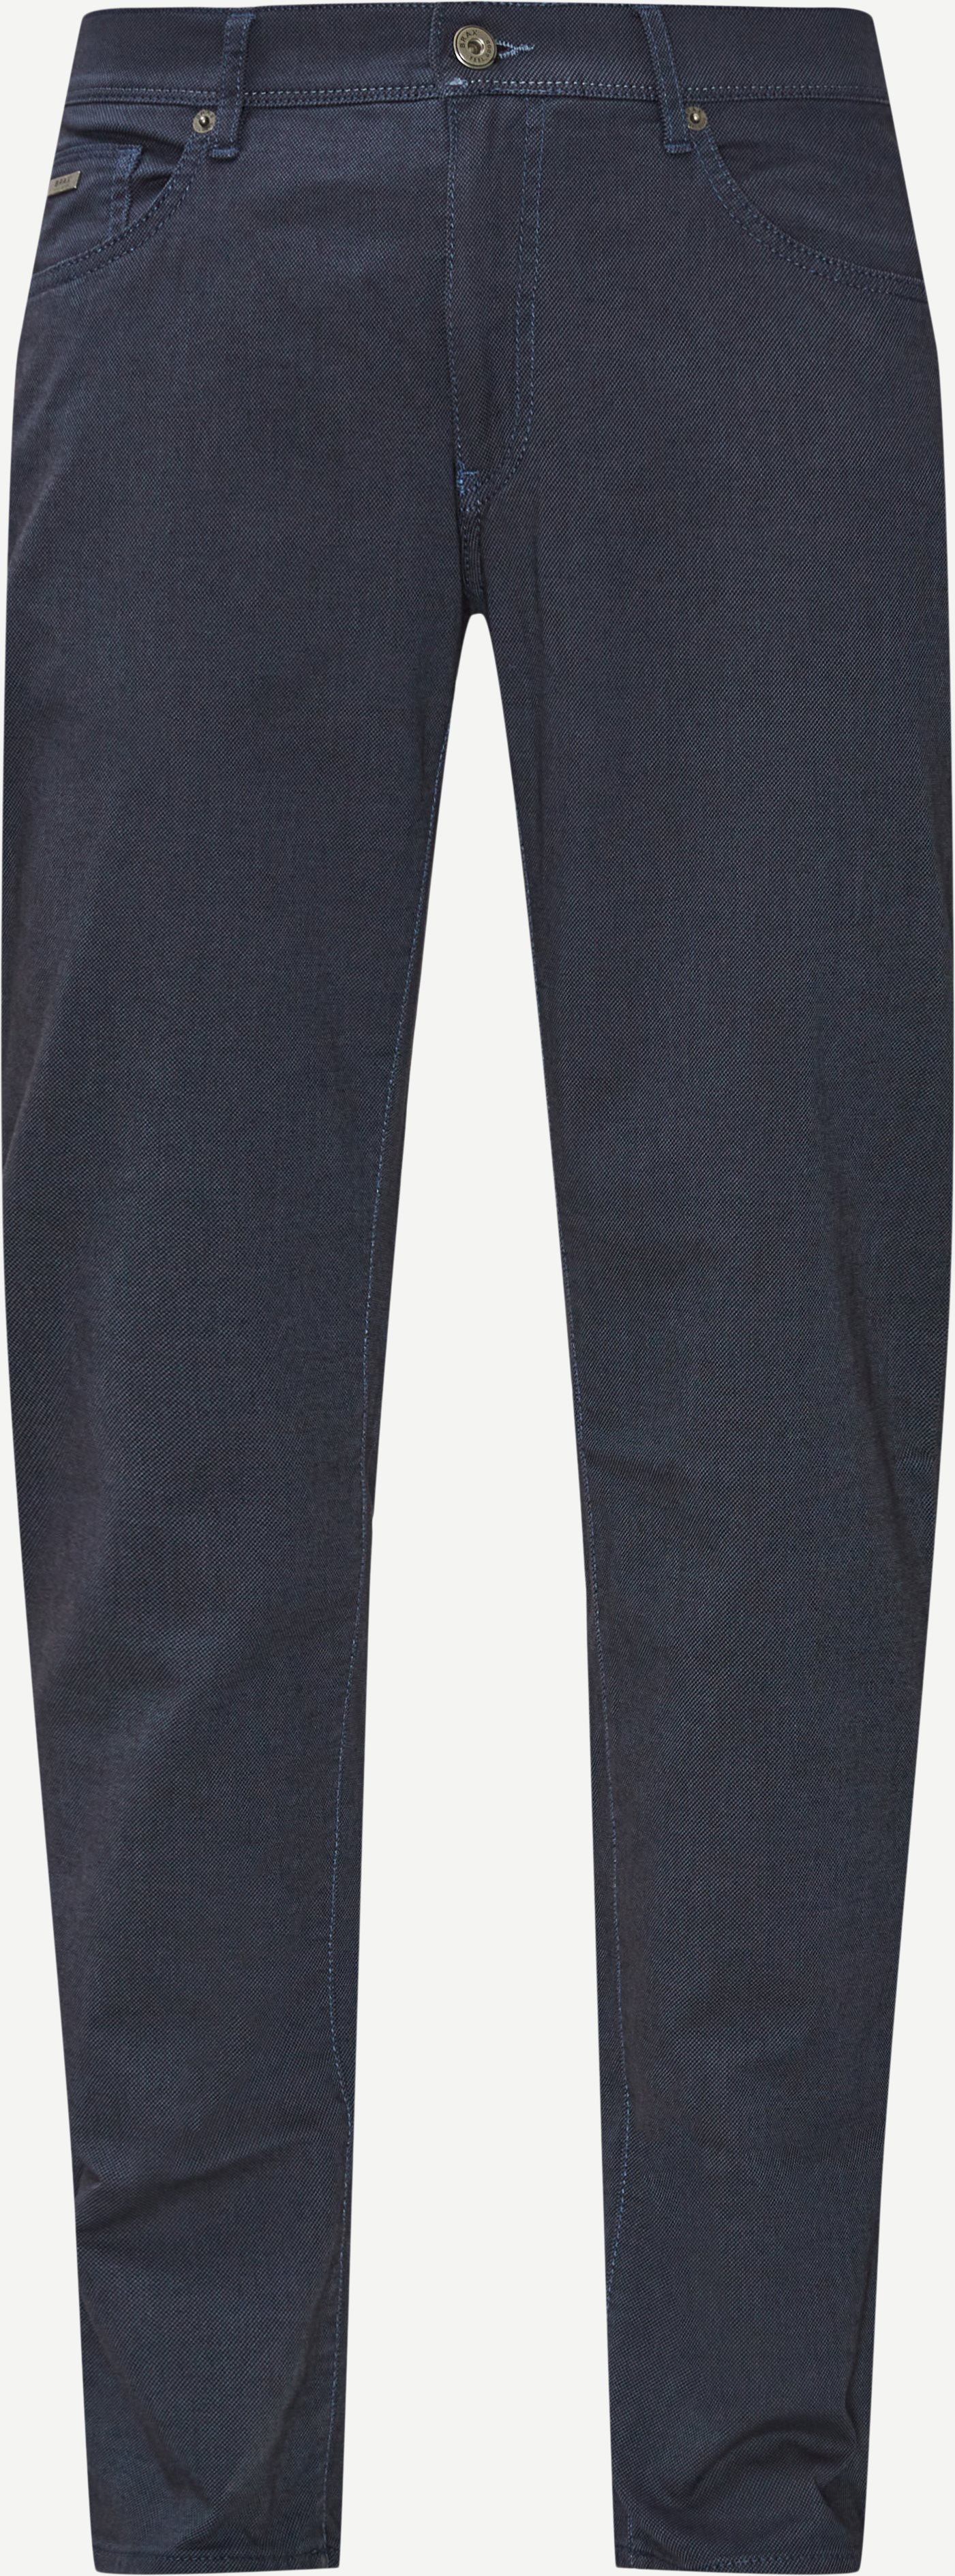 Jeans - Straight fit - Blå